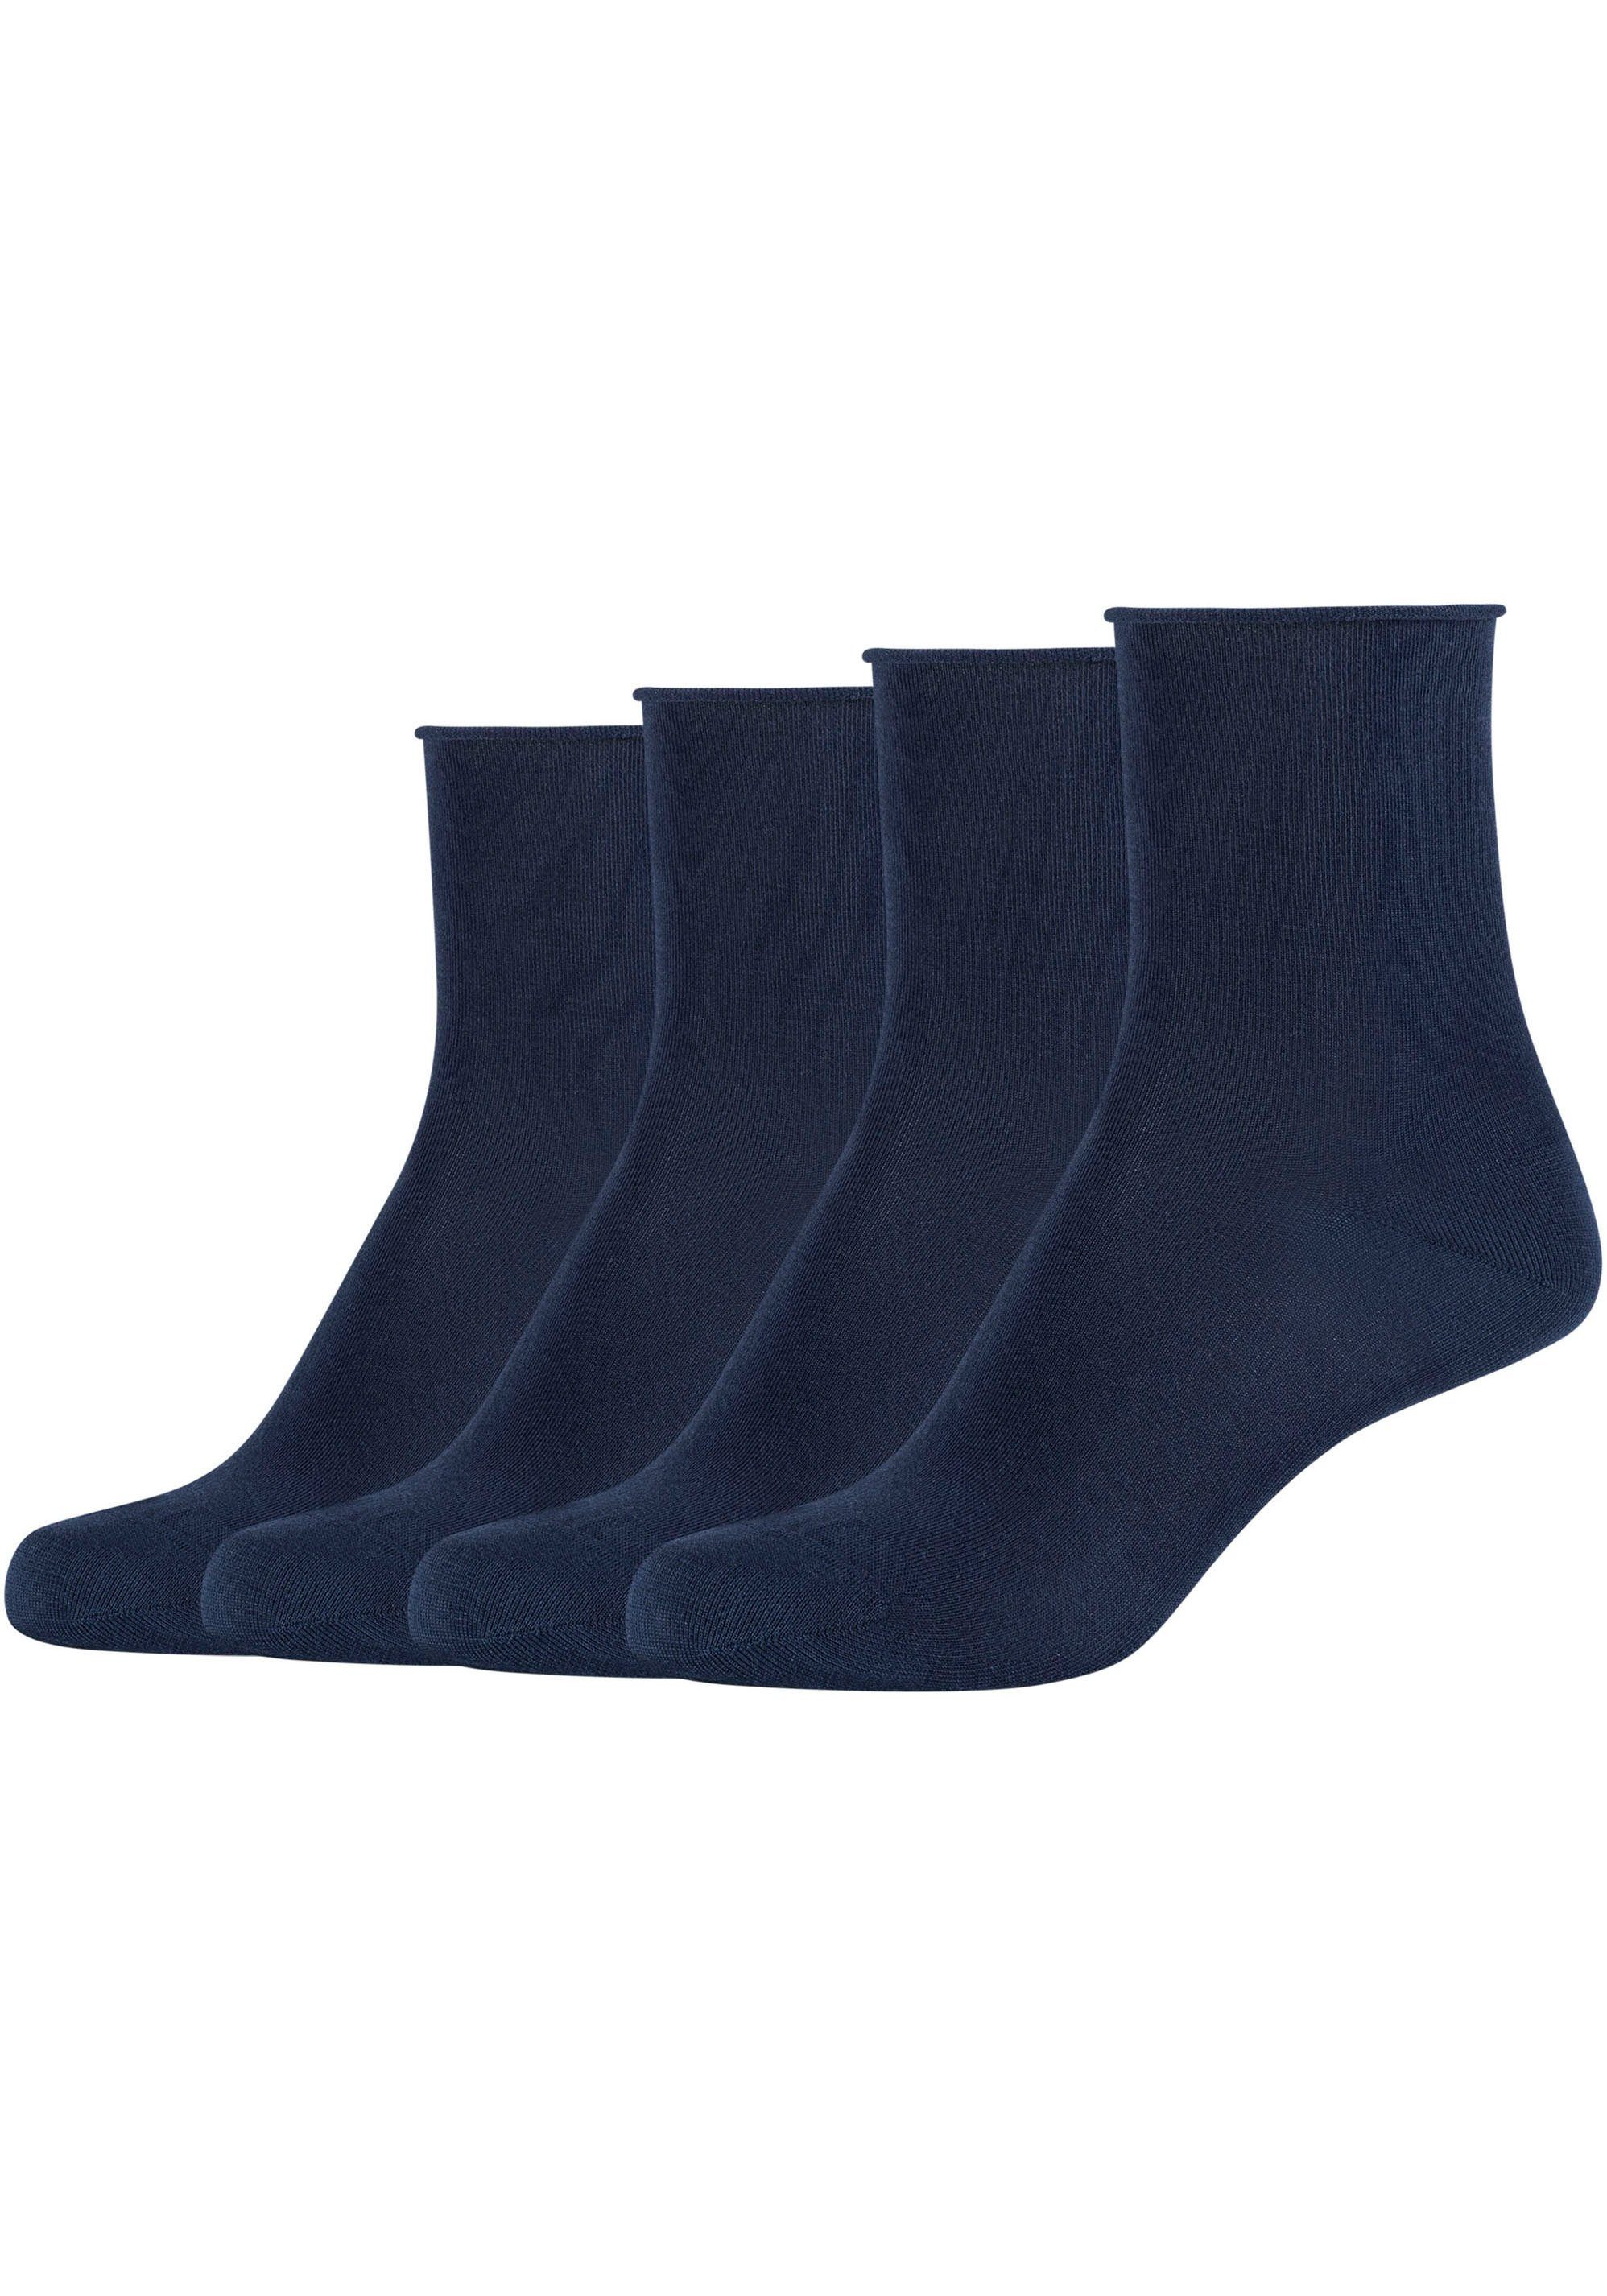 Rollrand Camano blue Mit Socken (Packung, 4-Paar)